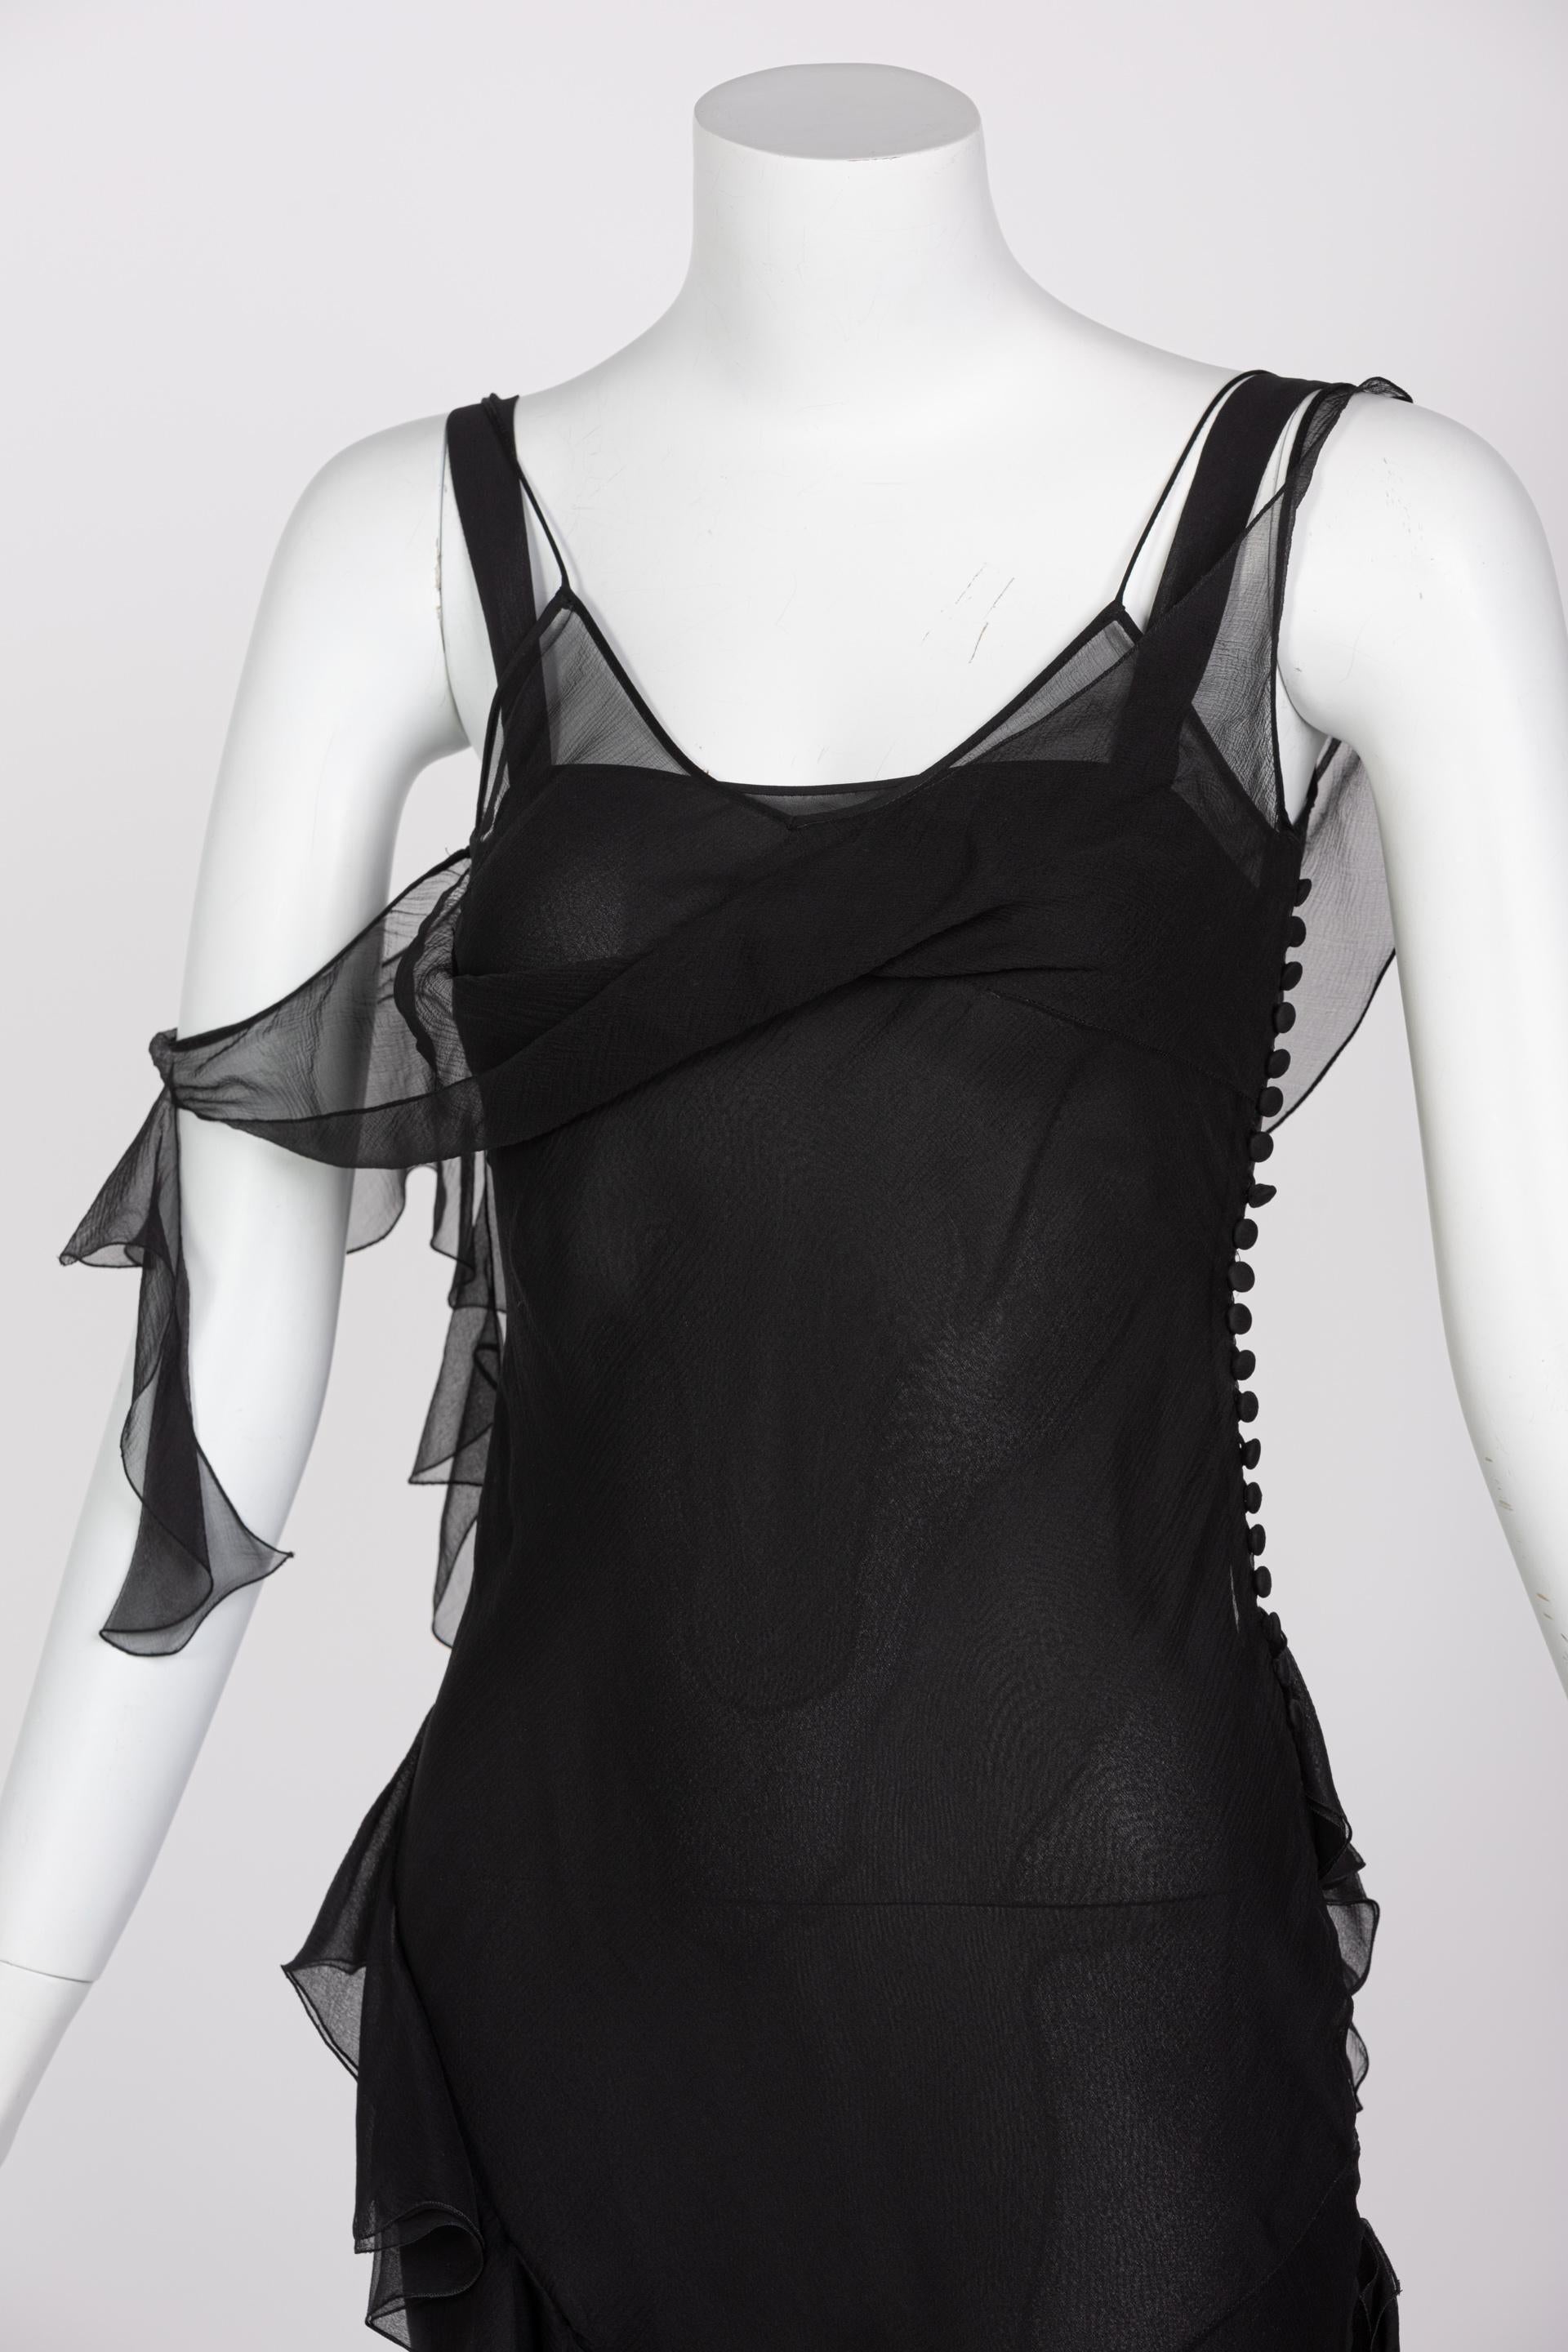 Christian Dior by Galliano Black Sheer Silk Sleeveless Dress 1